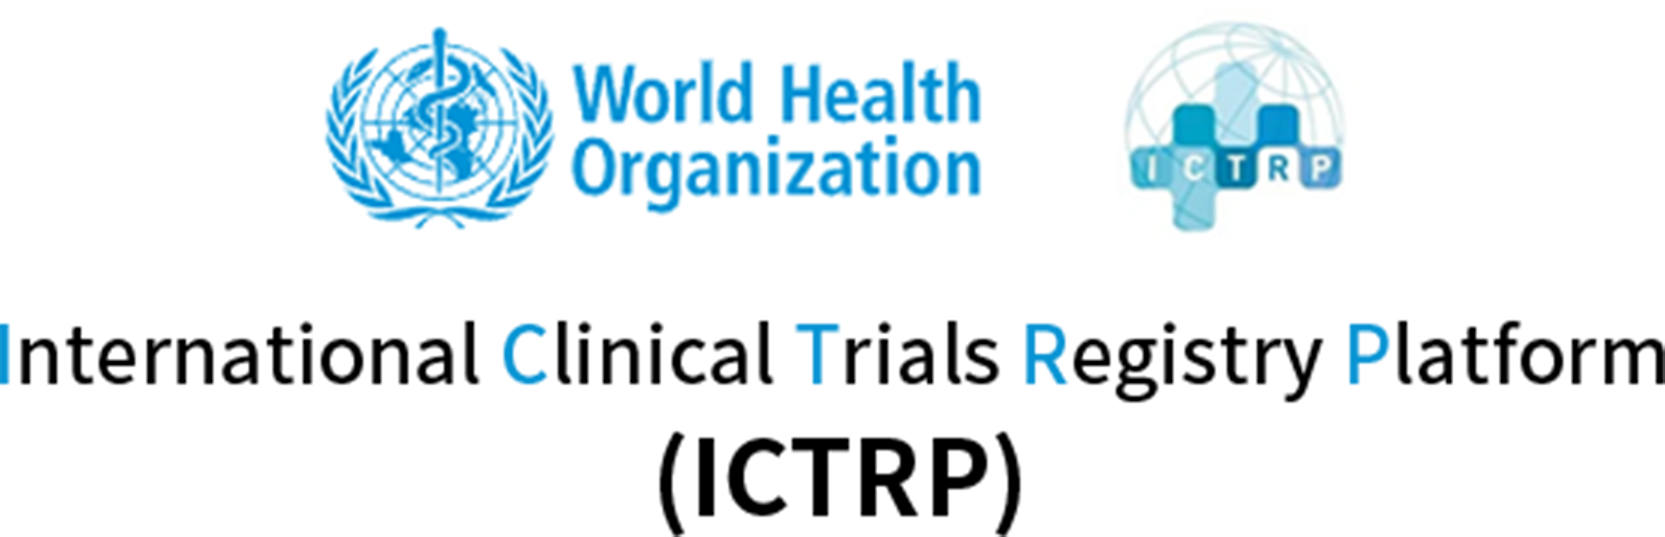 International Clinical Trials Registry Platform (ICTRP) 모바일용 로고